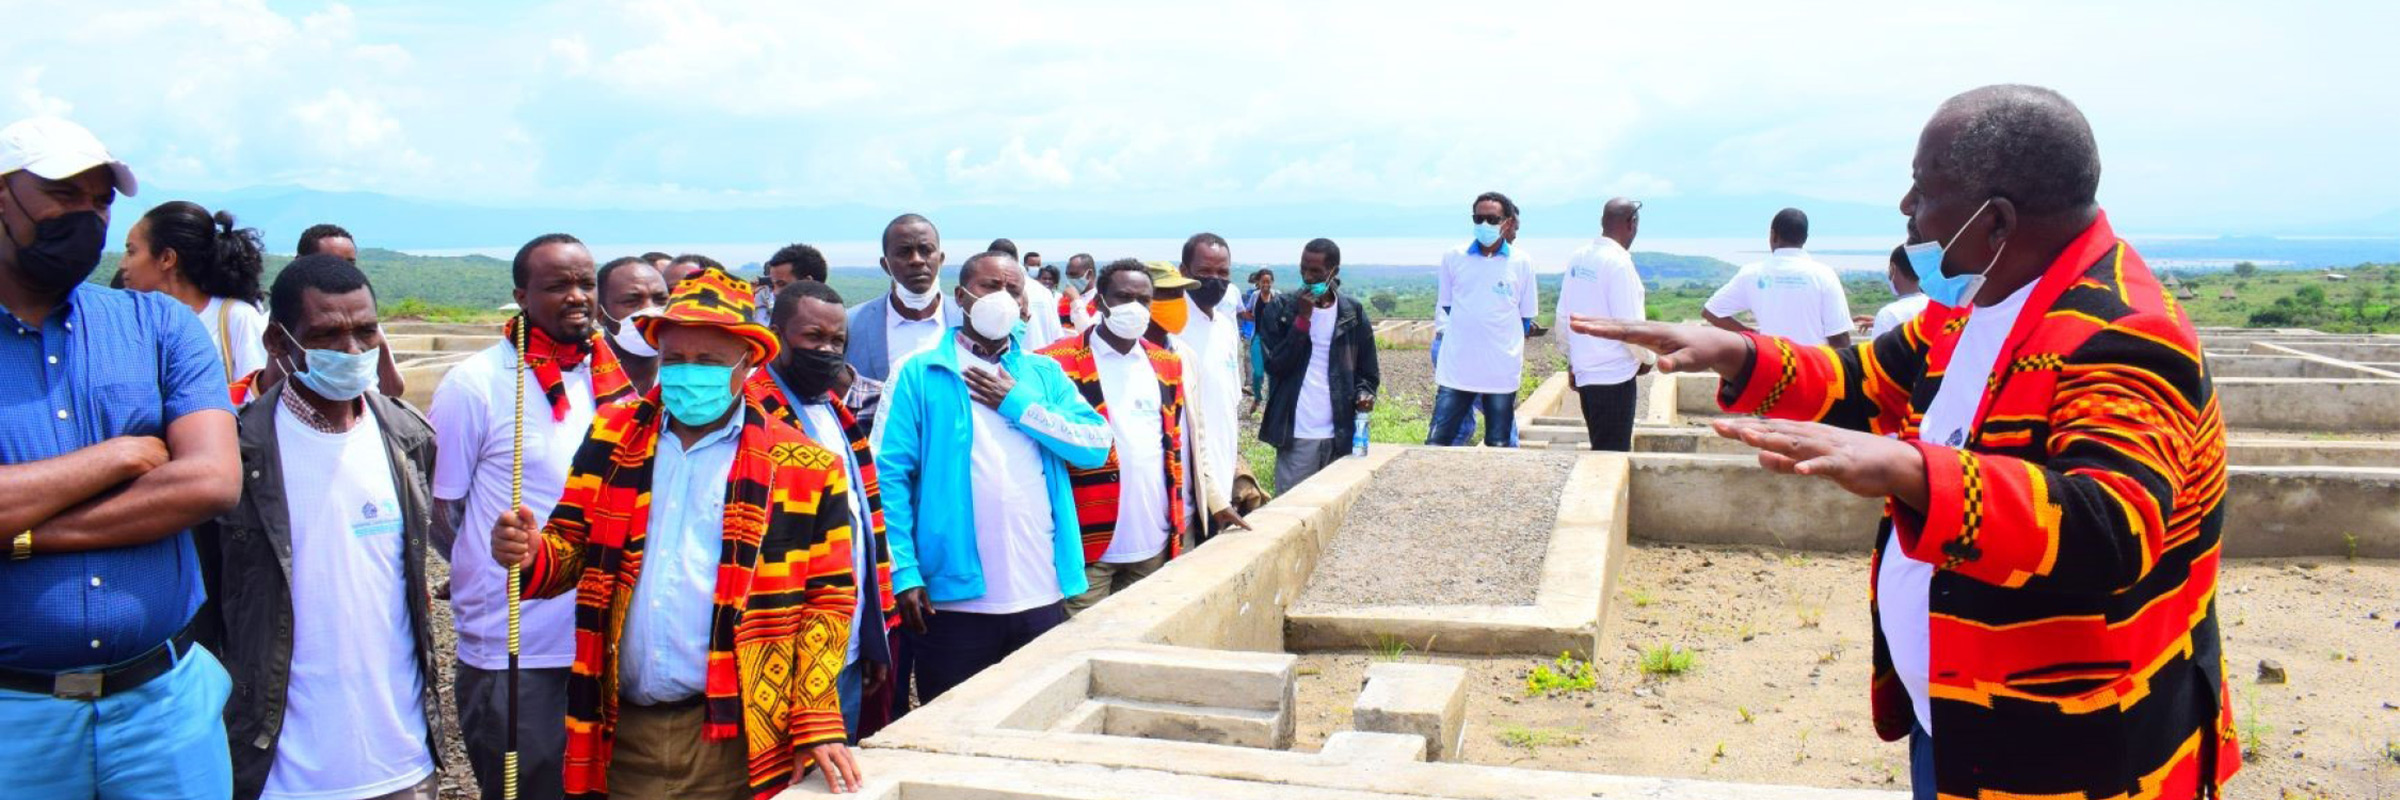 Improved Sanitation Value Chain in Arba Minch, Ethiopia